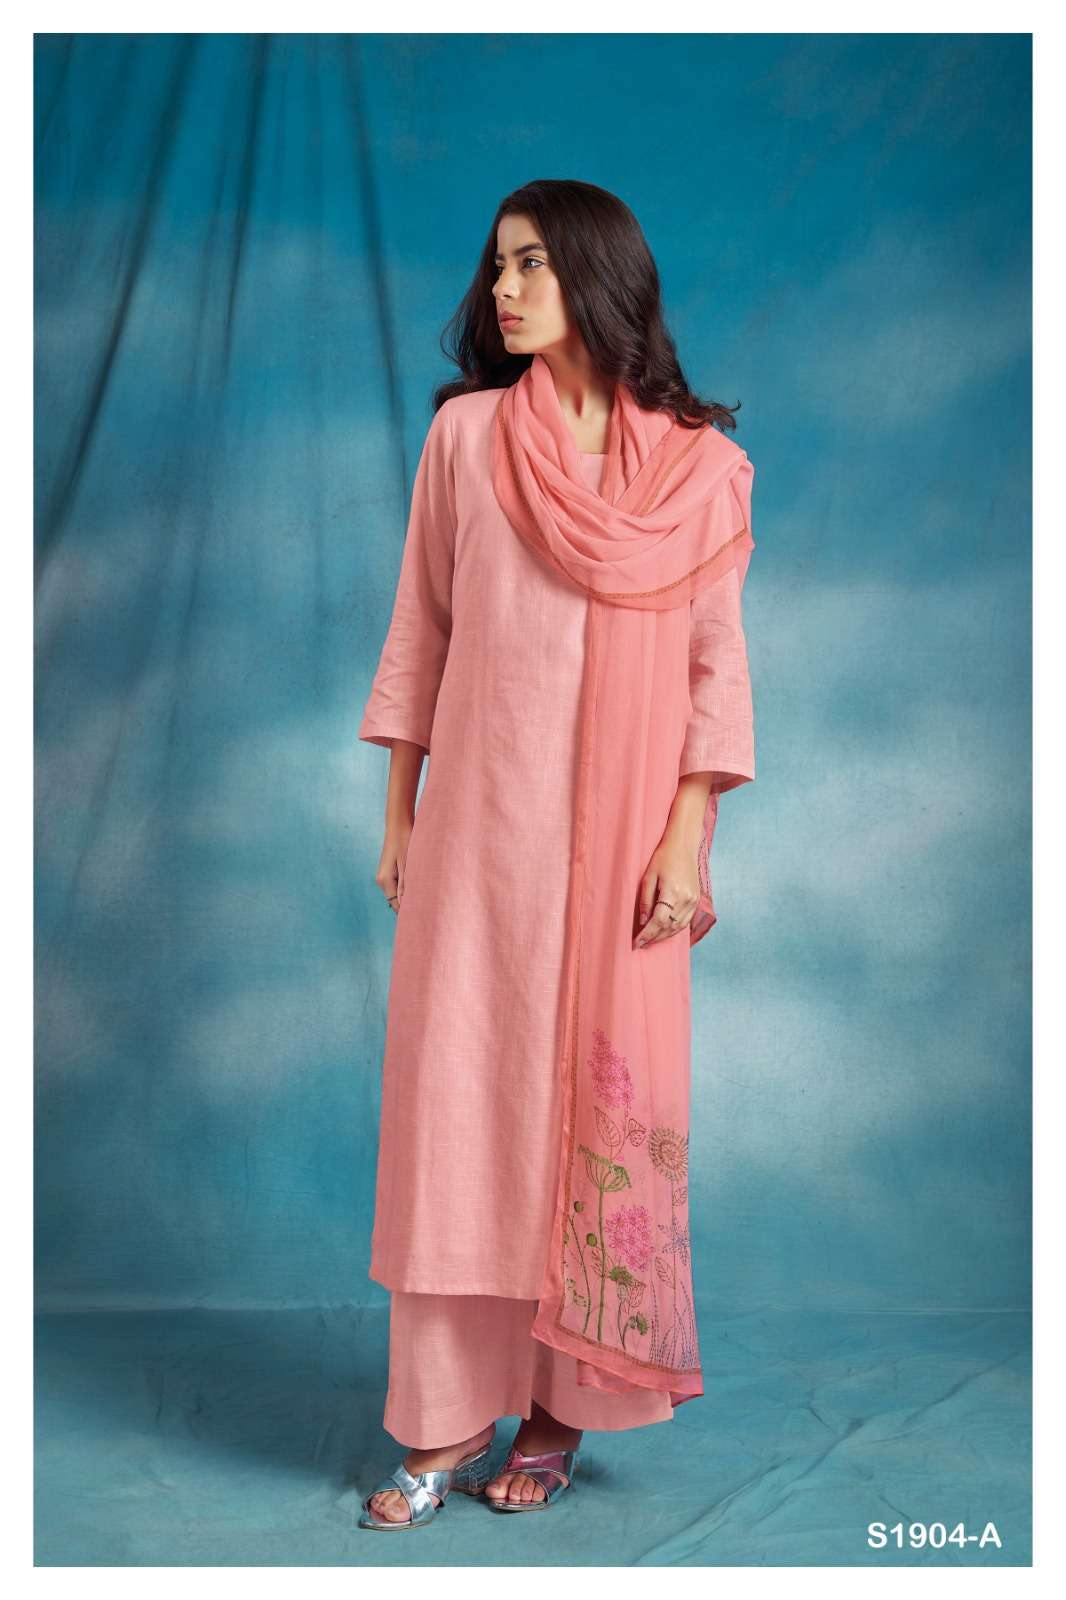 ganga ora 1904 series stylish designer salwar kameez catalogue wholesale price surat